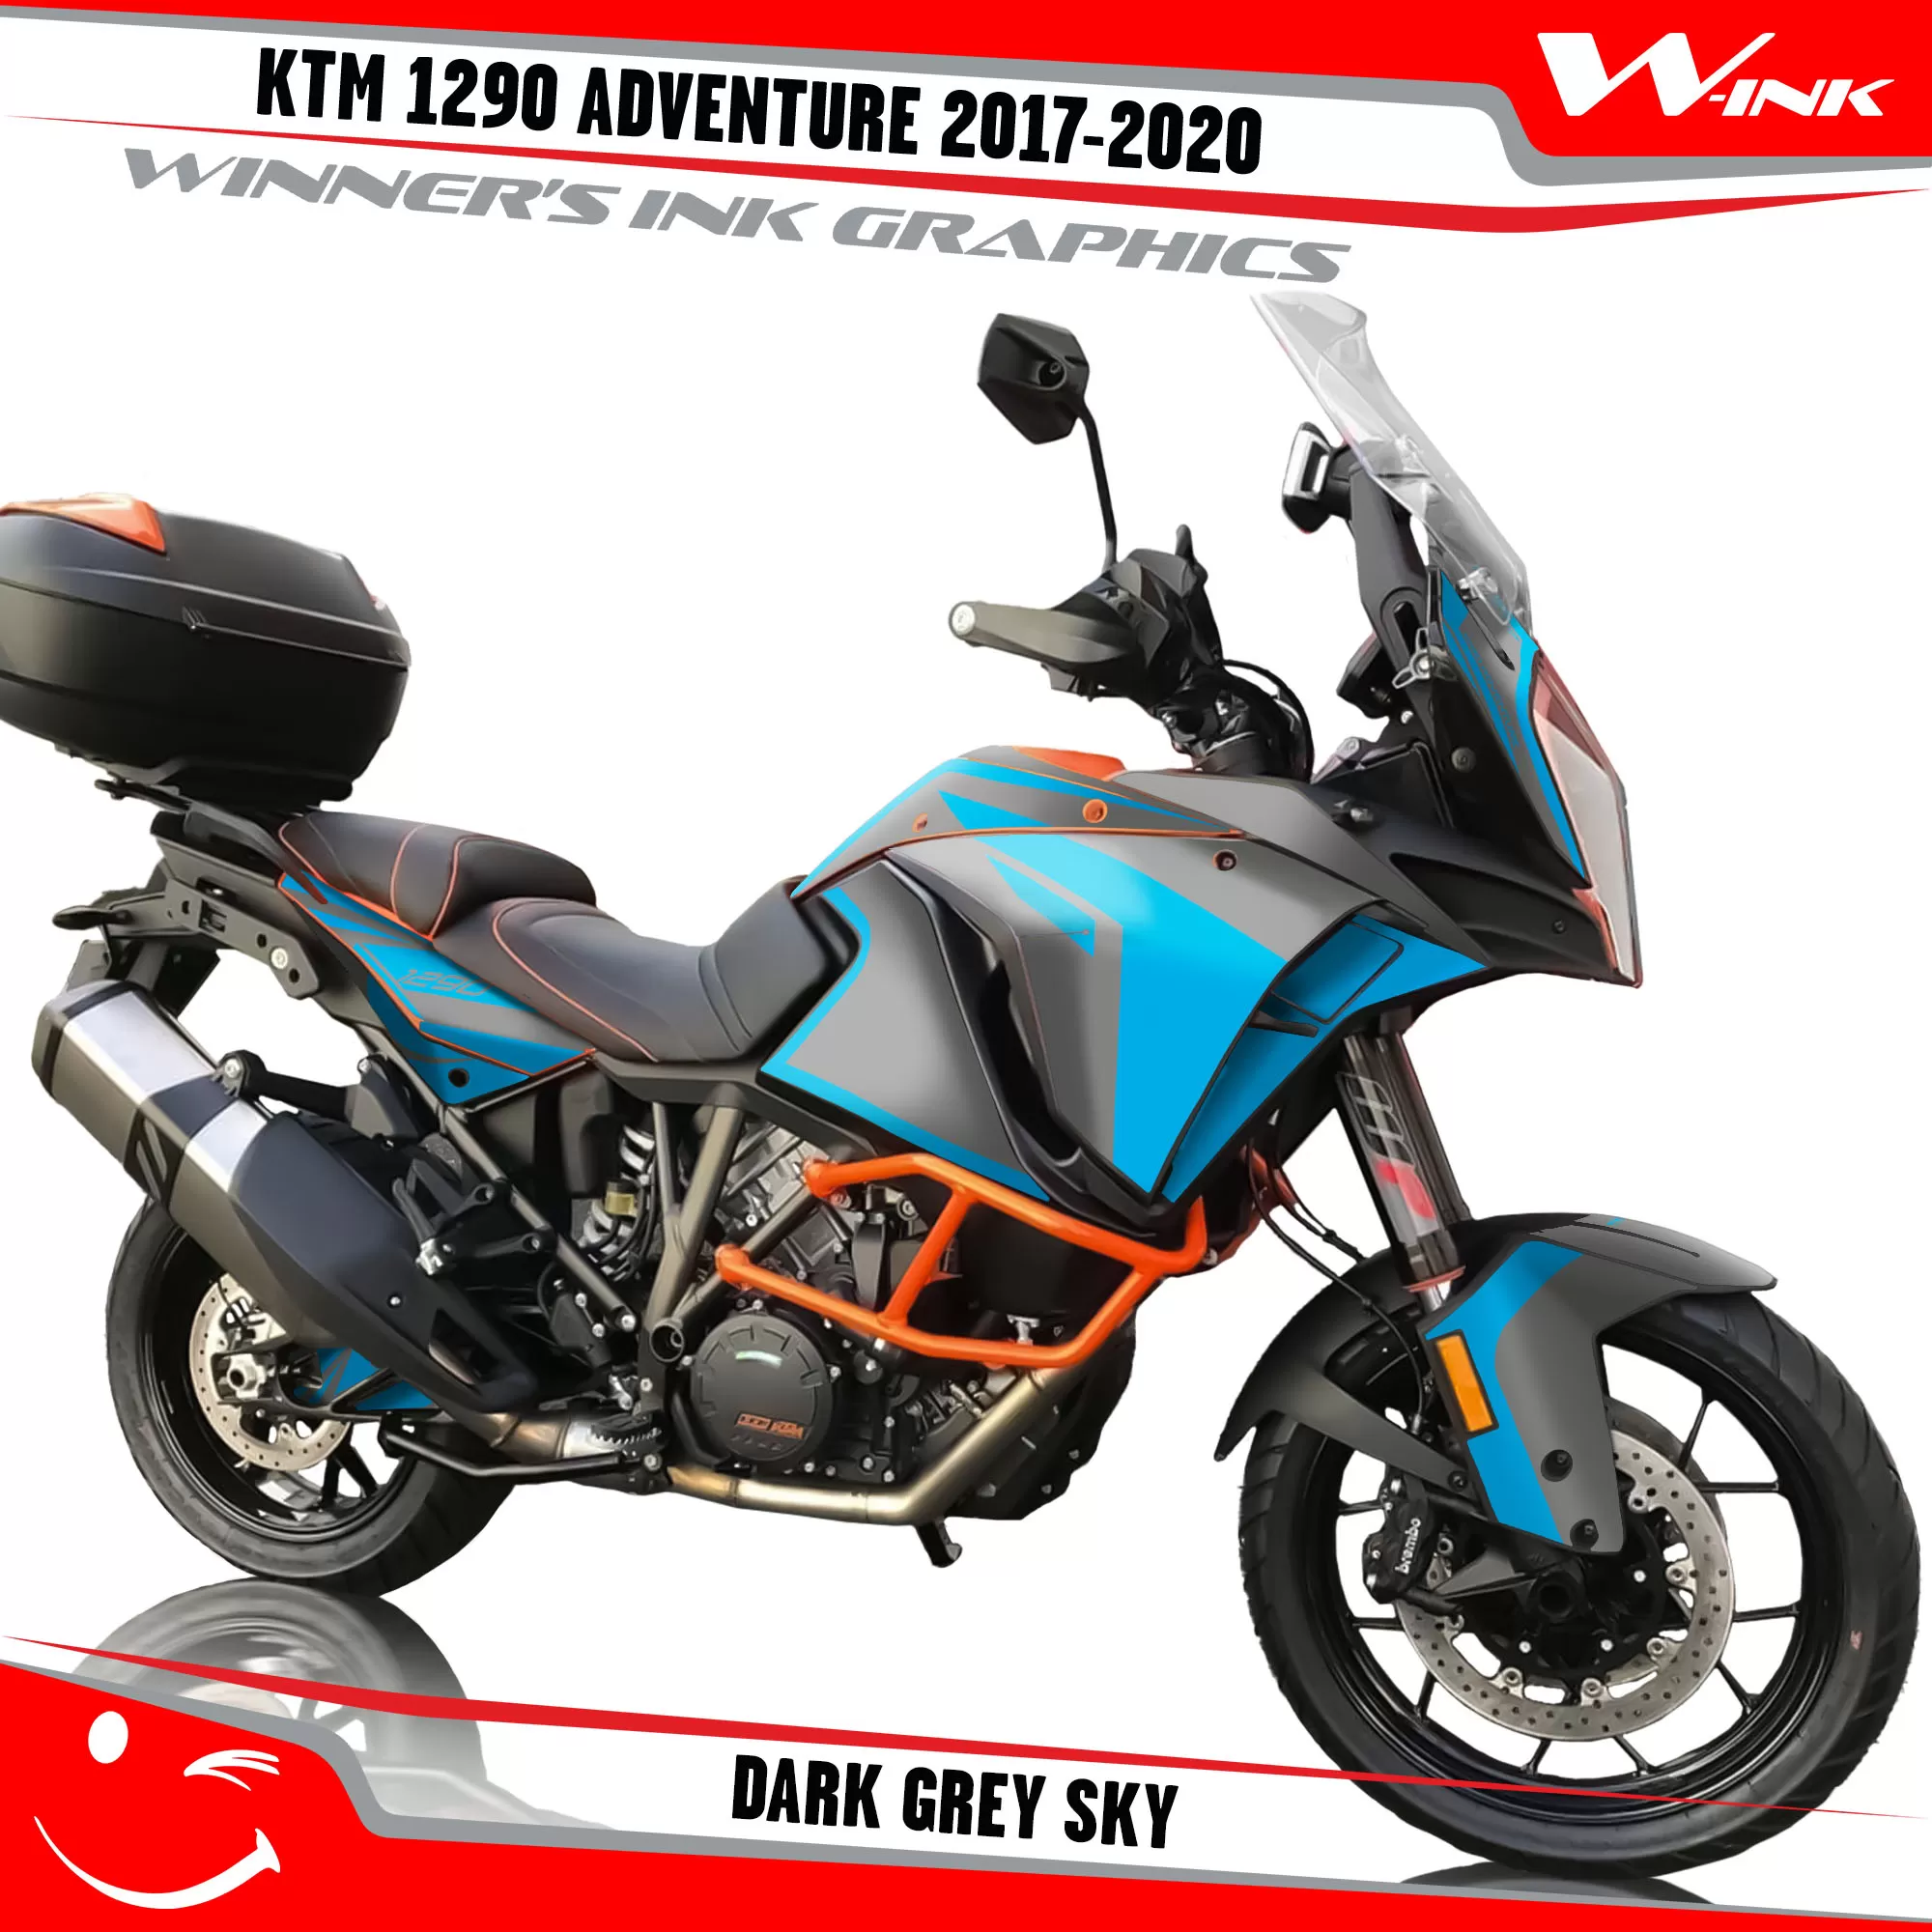 KTM-Adventure-1290-2017-2018-2019-2020-graphics-kit-and-decals-Dark-Grey-Sky